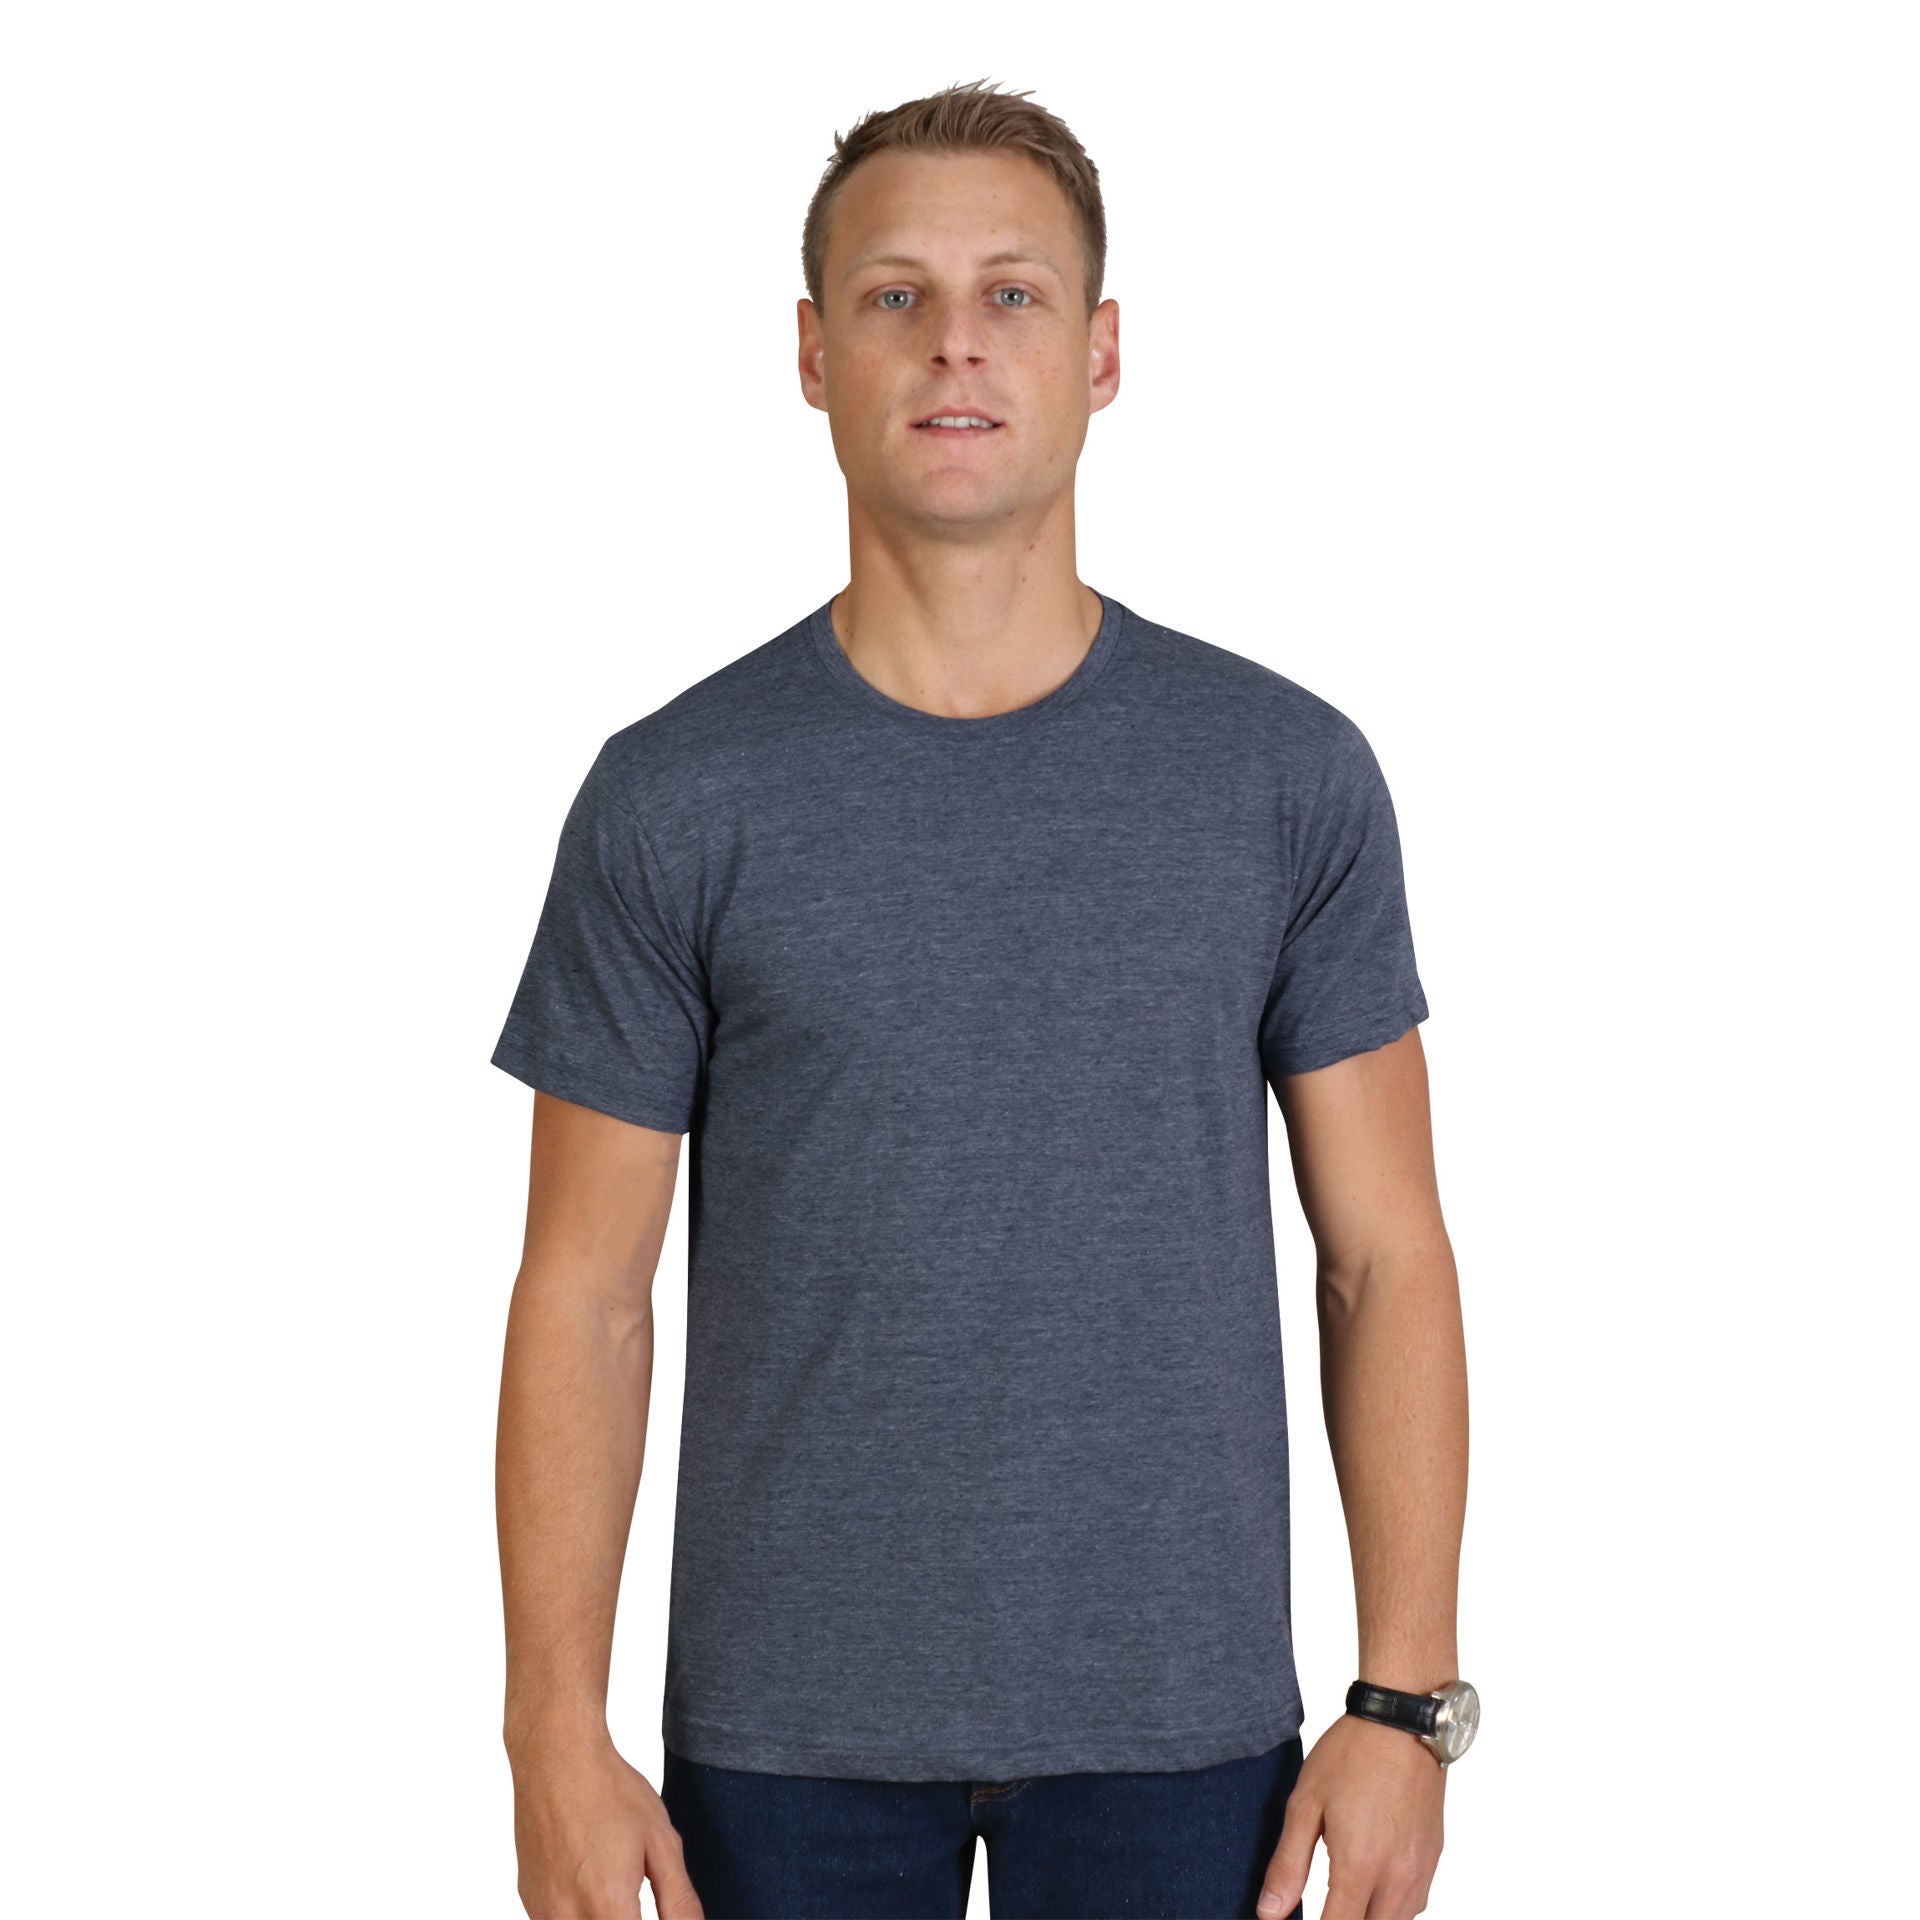 150g Fashion Fit T-Shirt Ash Navy Melange / 3XL